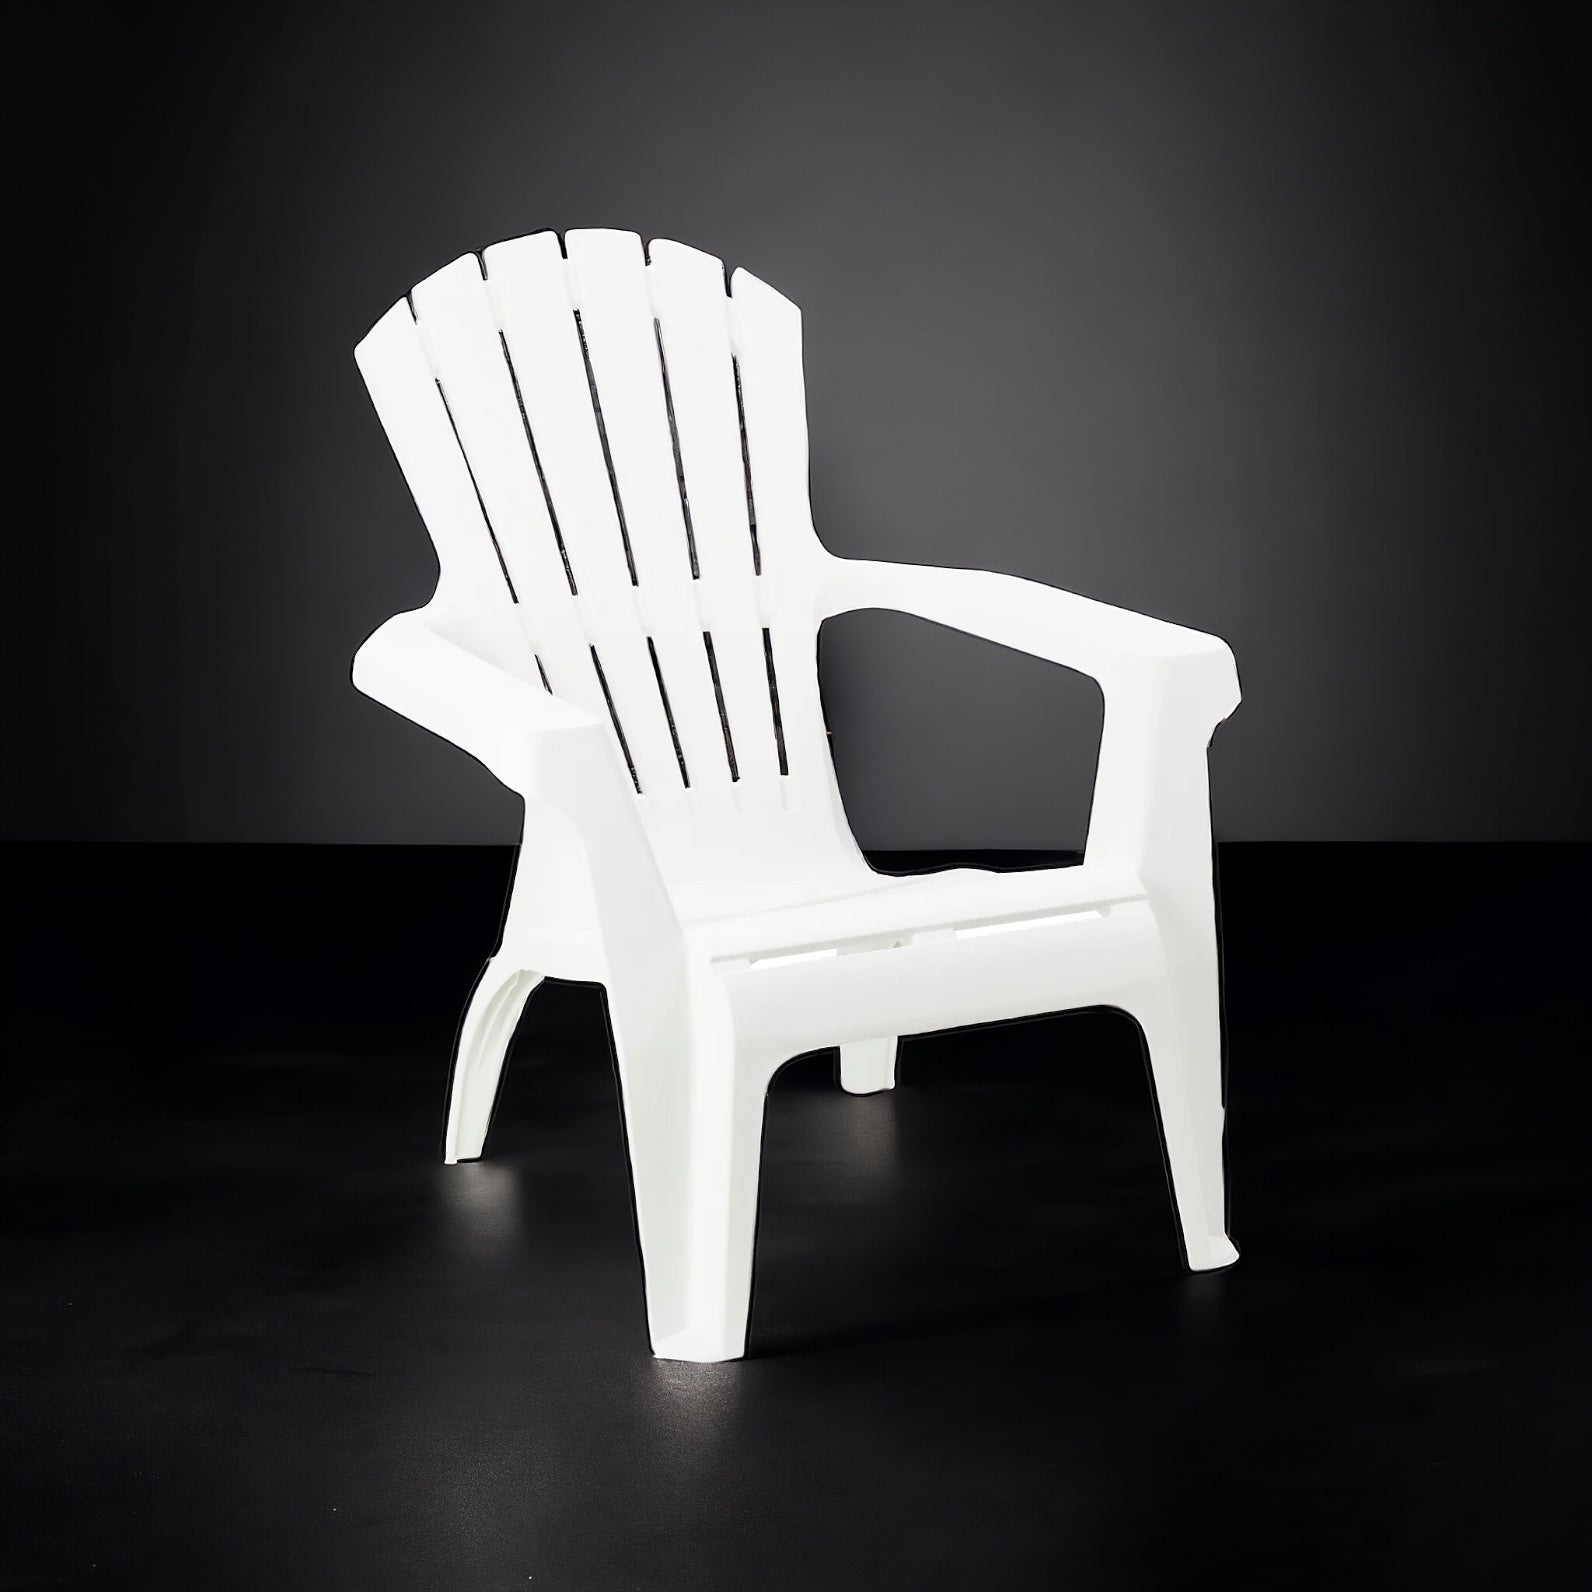 Brights Chair White